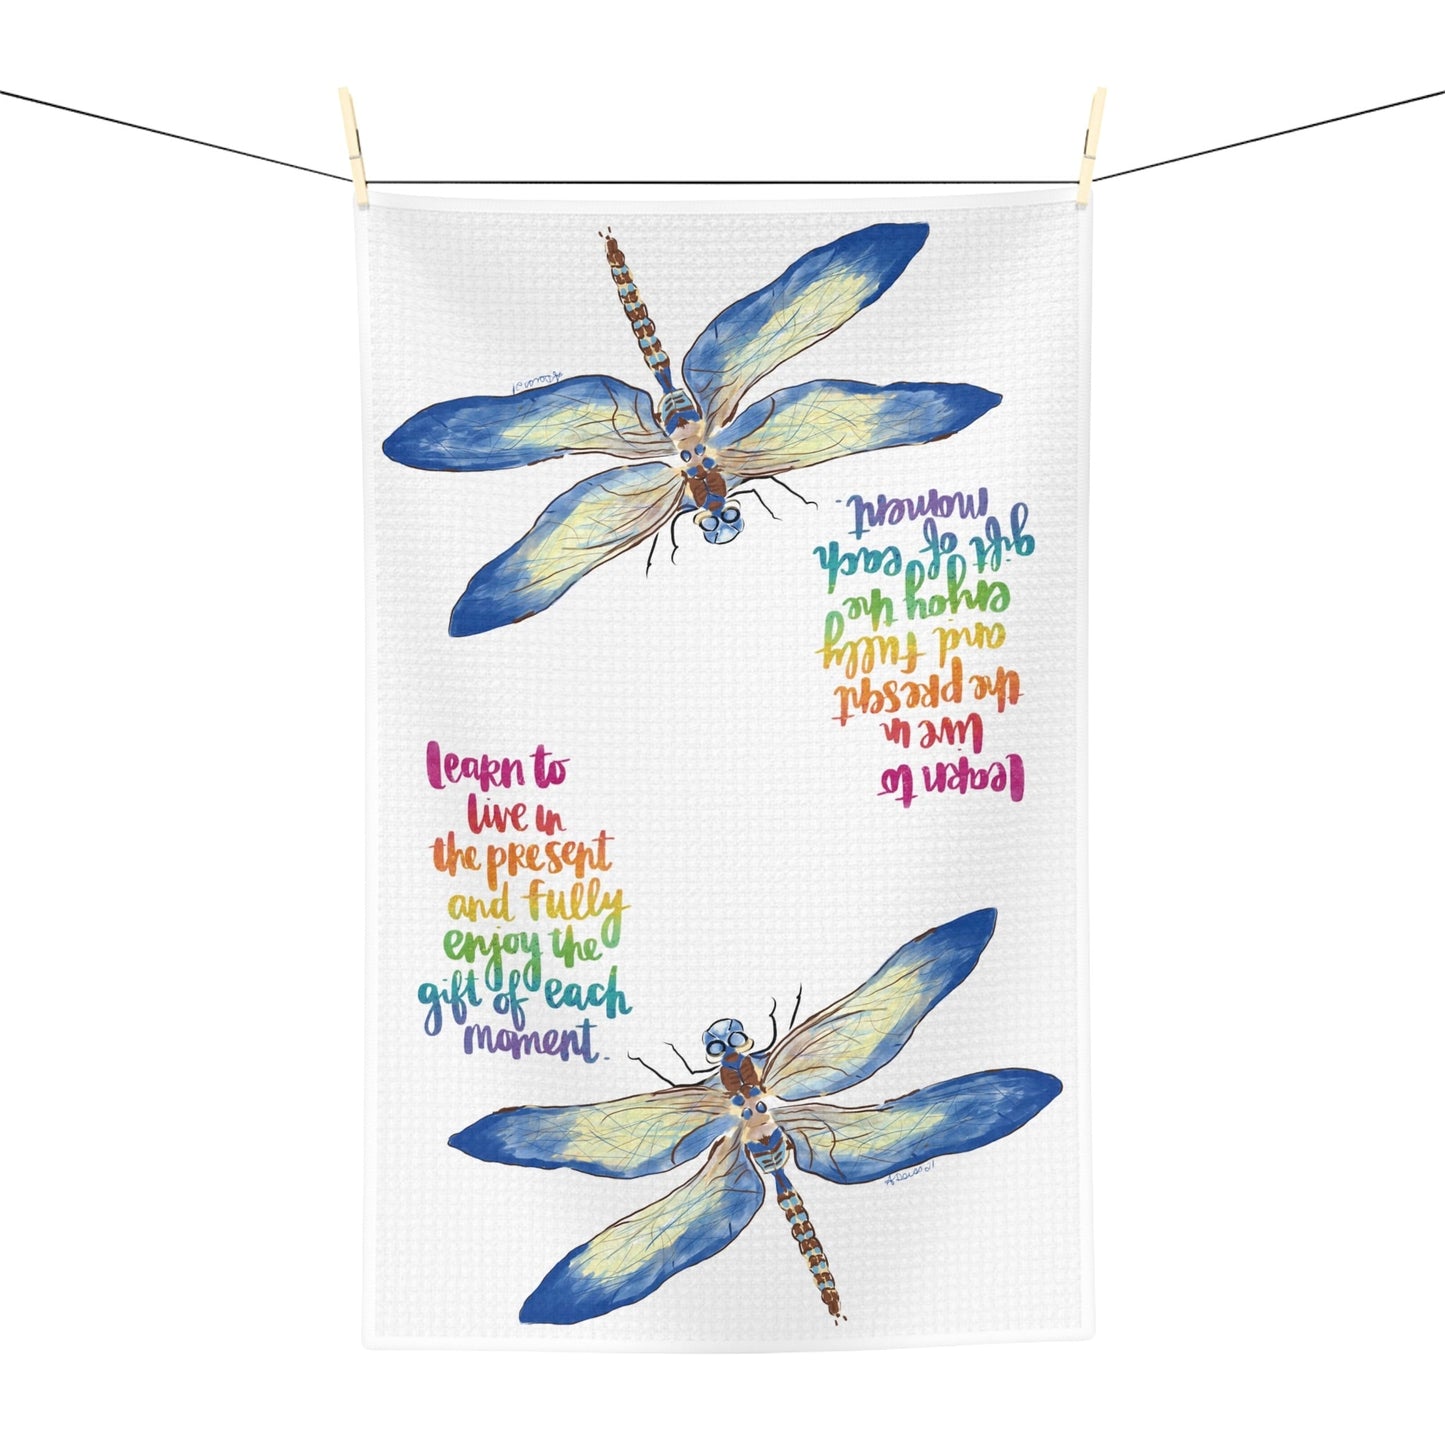 Dragonfly Microfiber Waffle Towel - Blue Cava